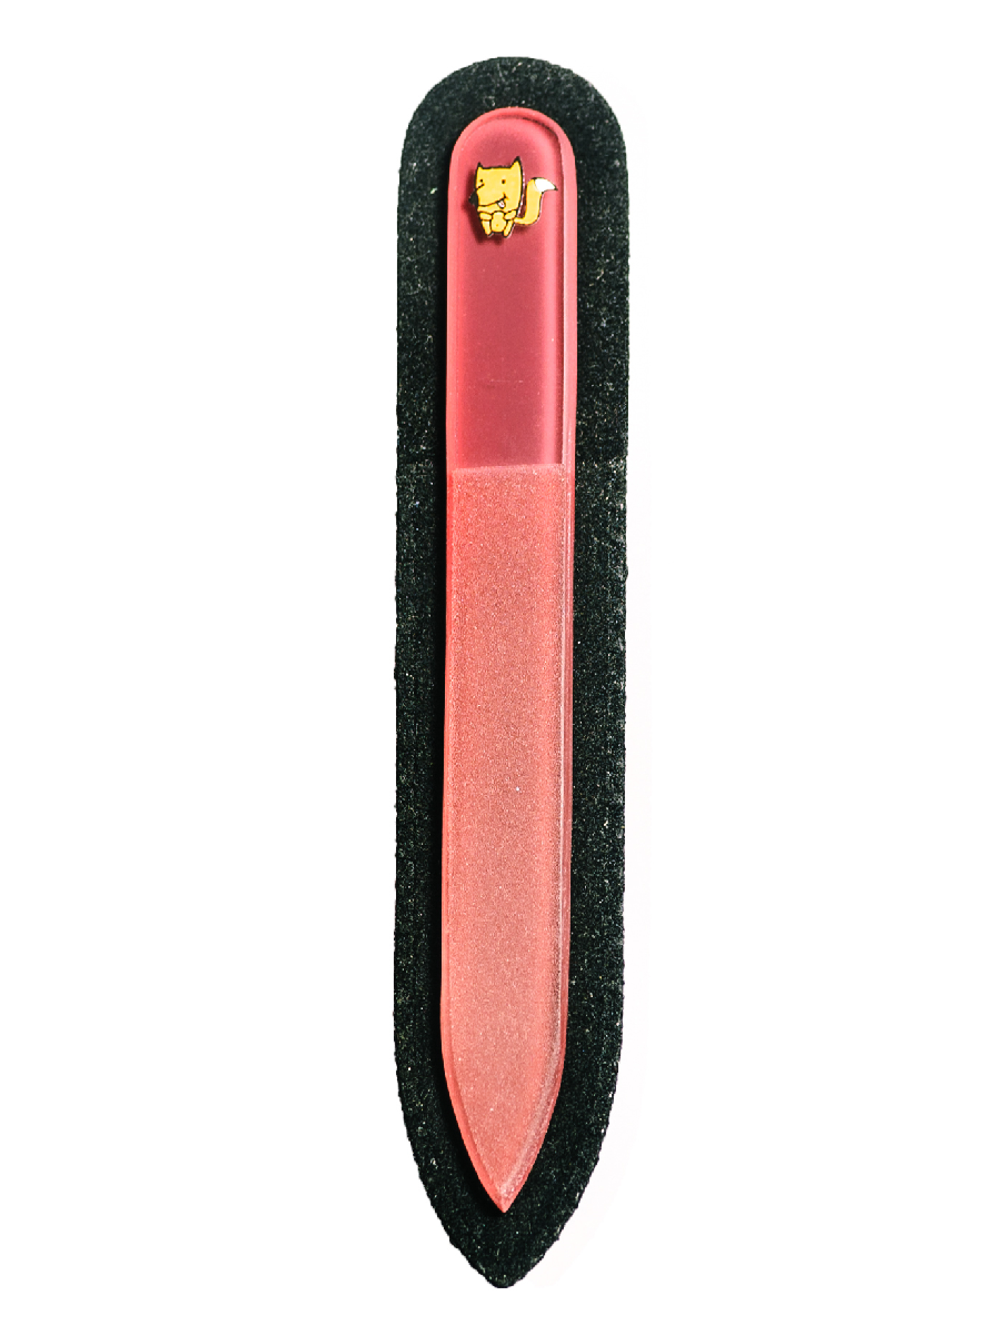 Chili Пилочка для ногтей, хрусталь, красная, Лиса, 90 мм